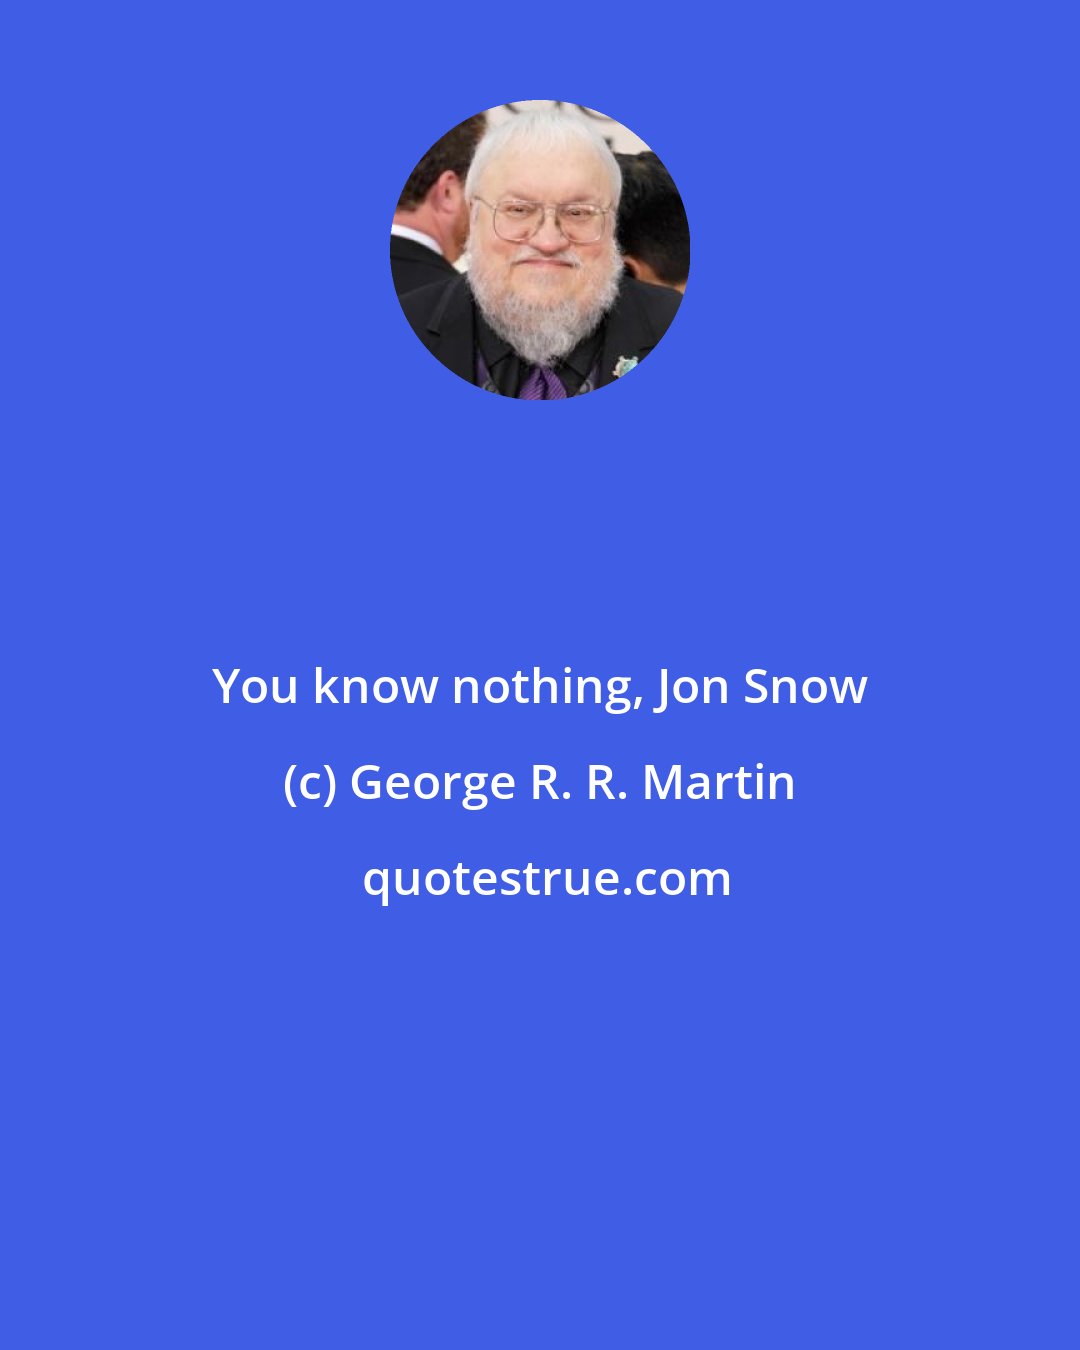 George R. R. Martin: You know nothing, Jon Snow